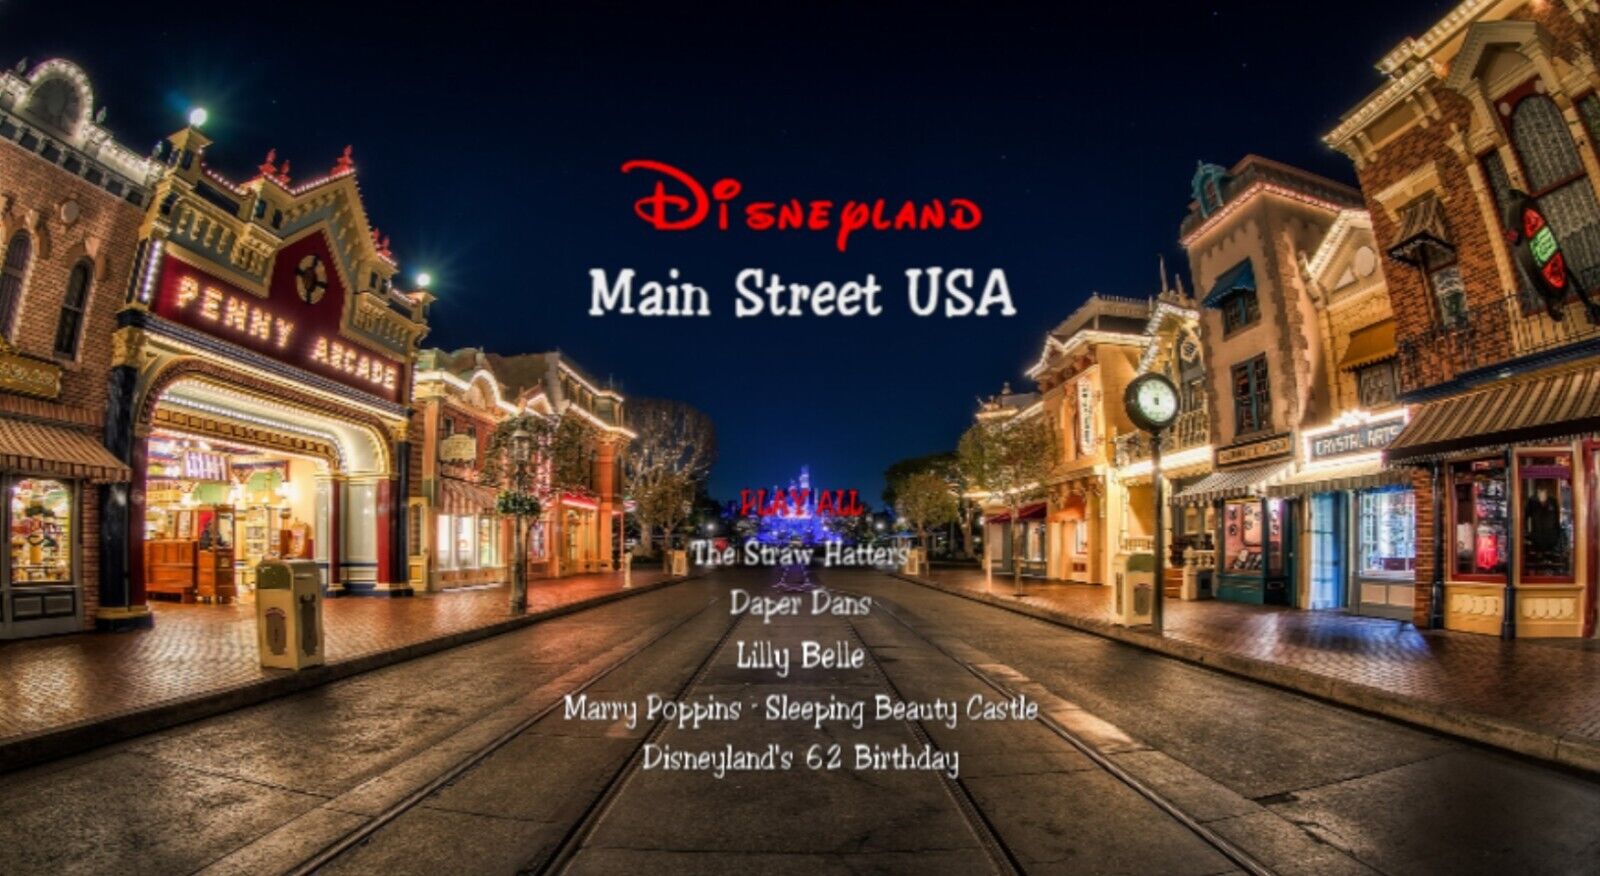 Disneyland Attractions DVD 02 - Main Street USA